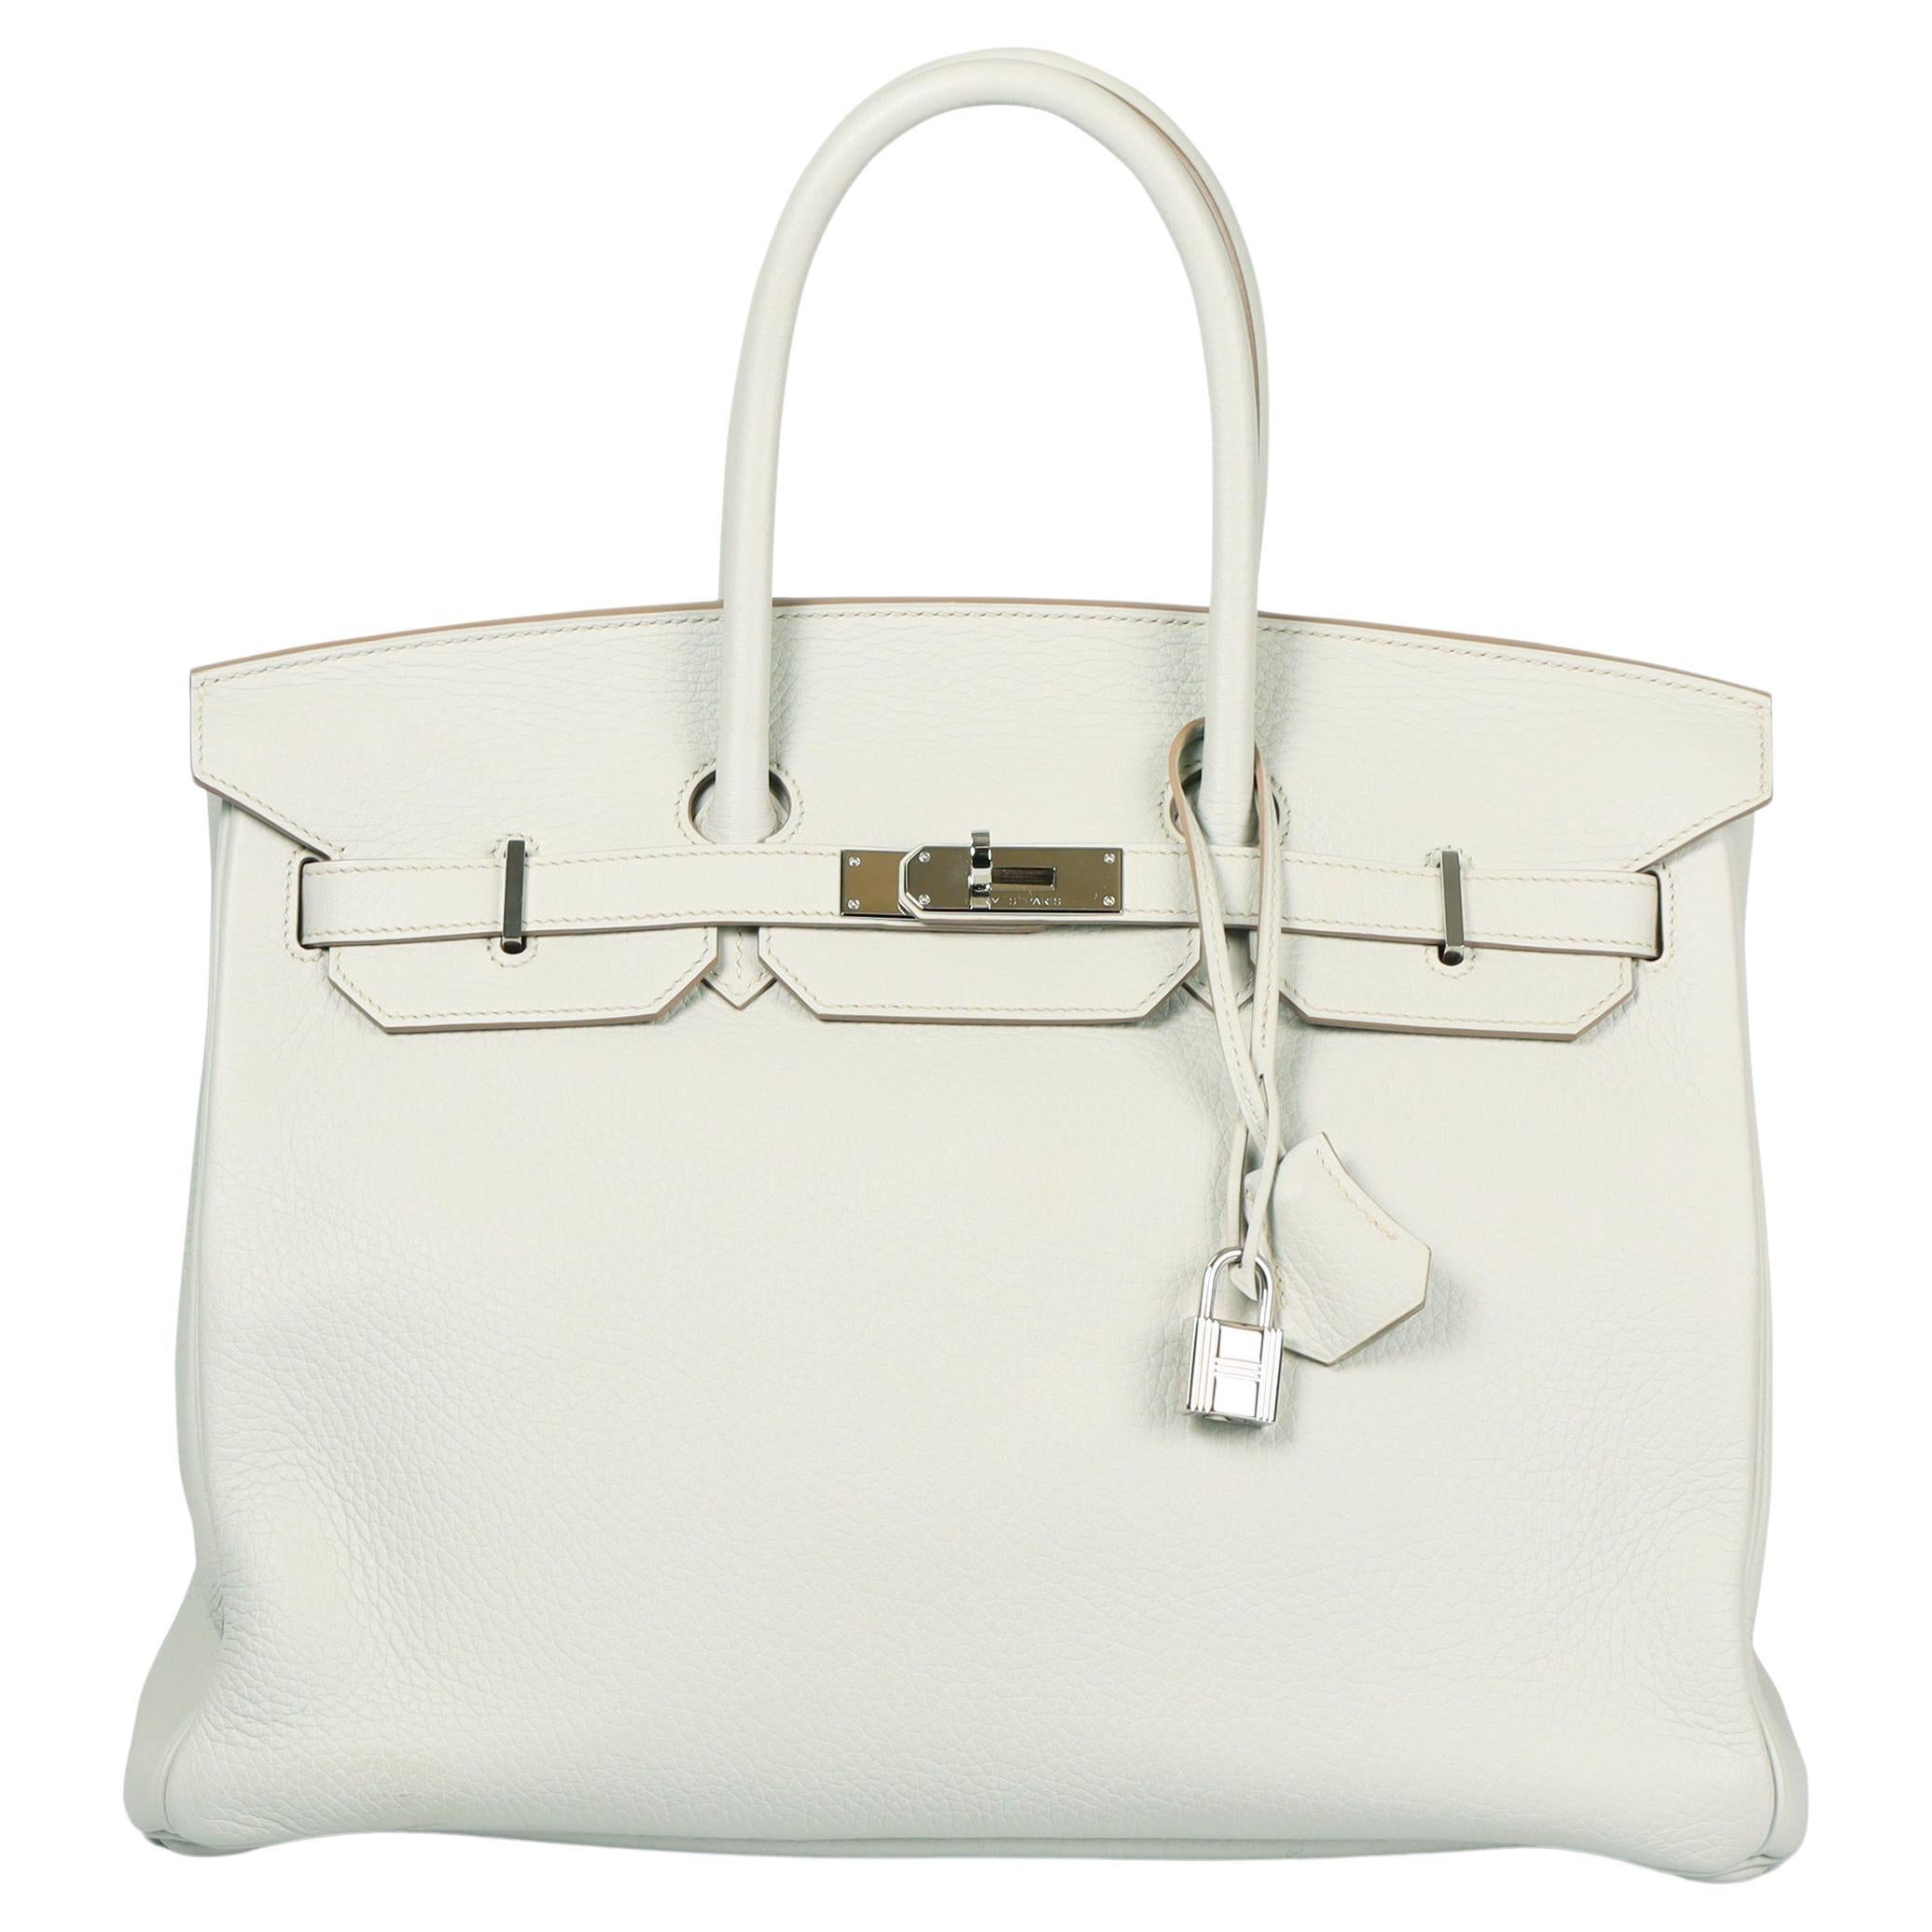 Hermès 2013 Birkin 35cm Togo Leather Bag For Sale